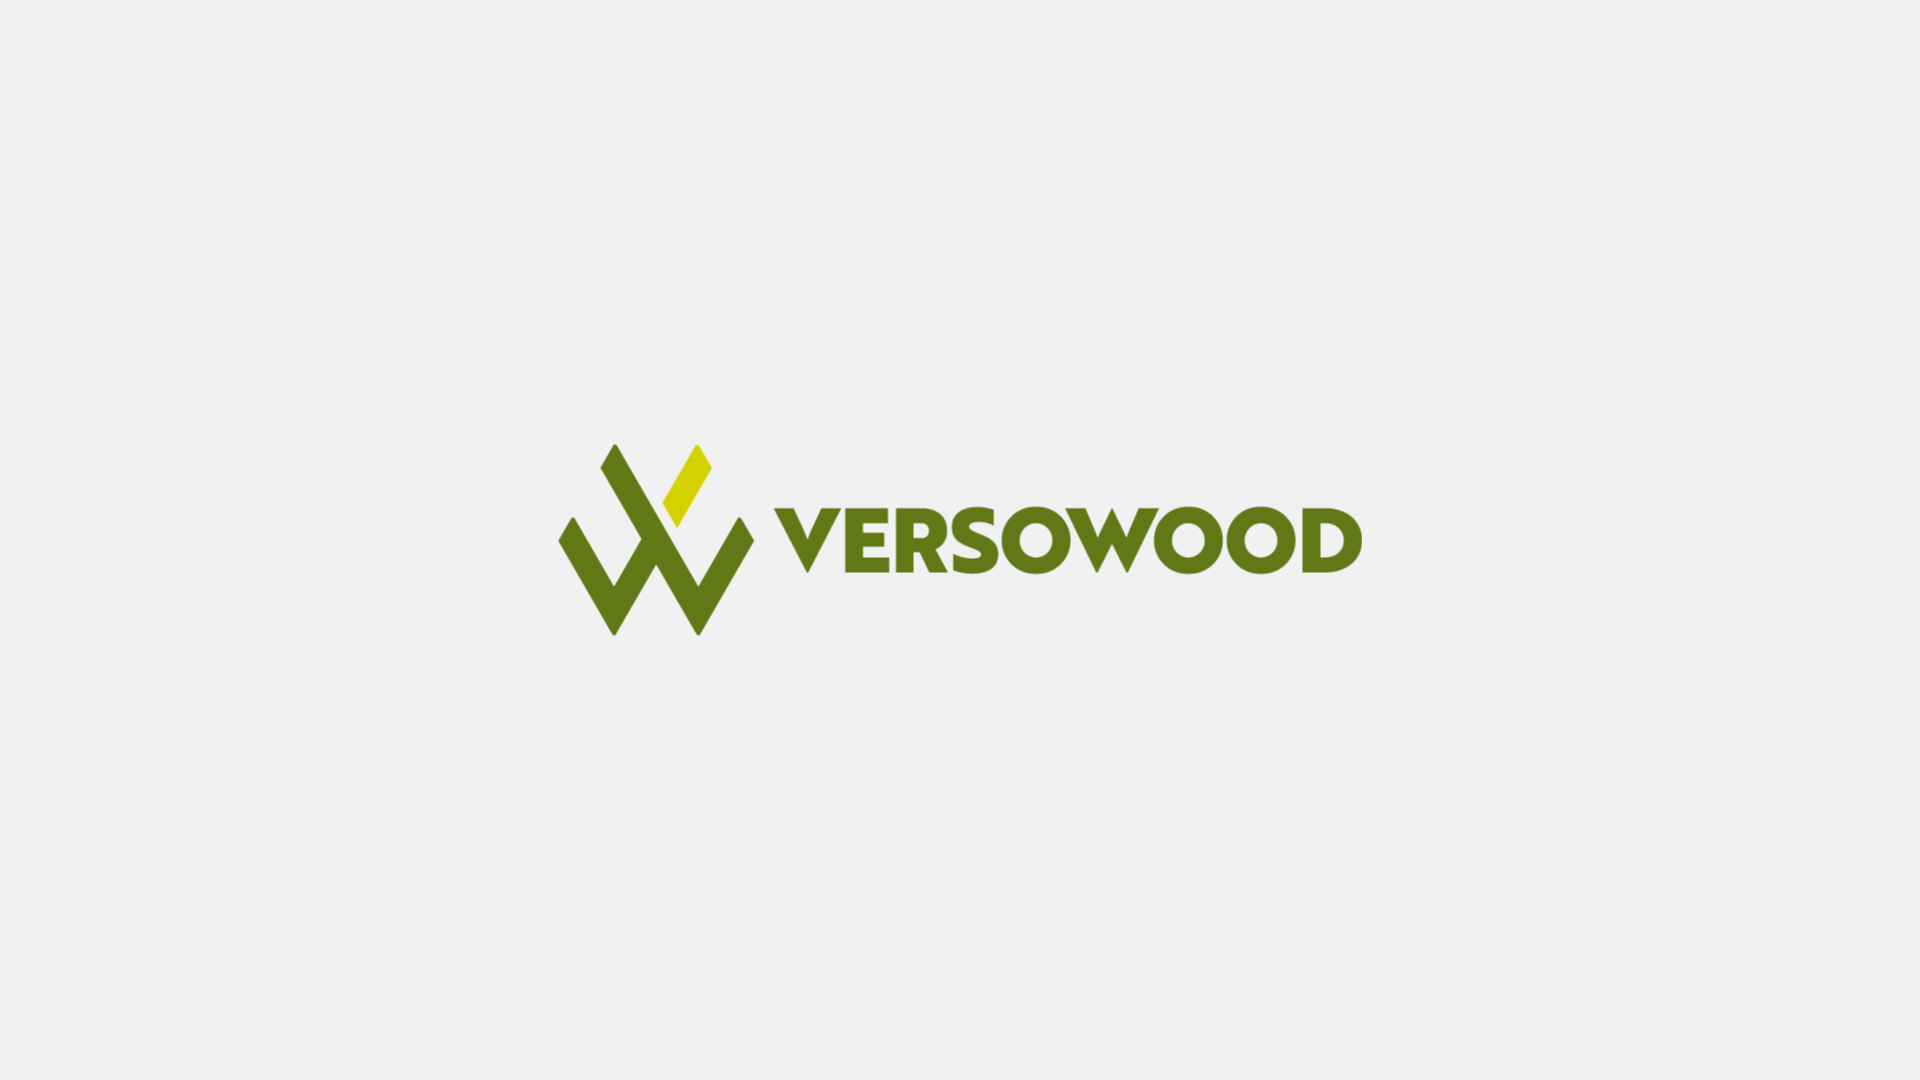 Versowood